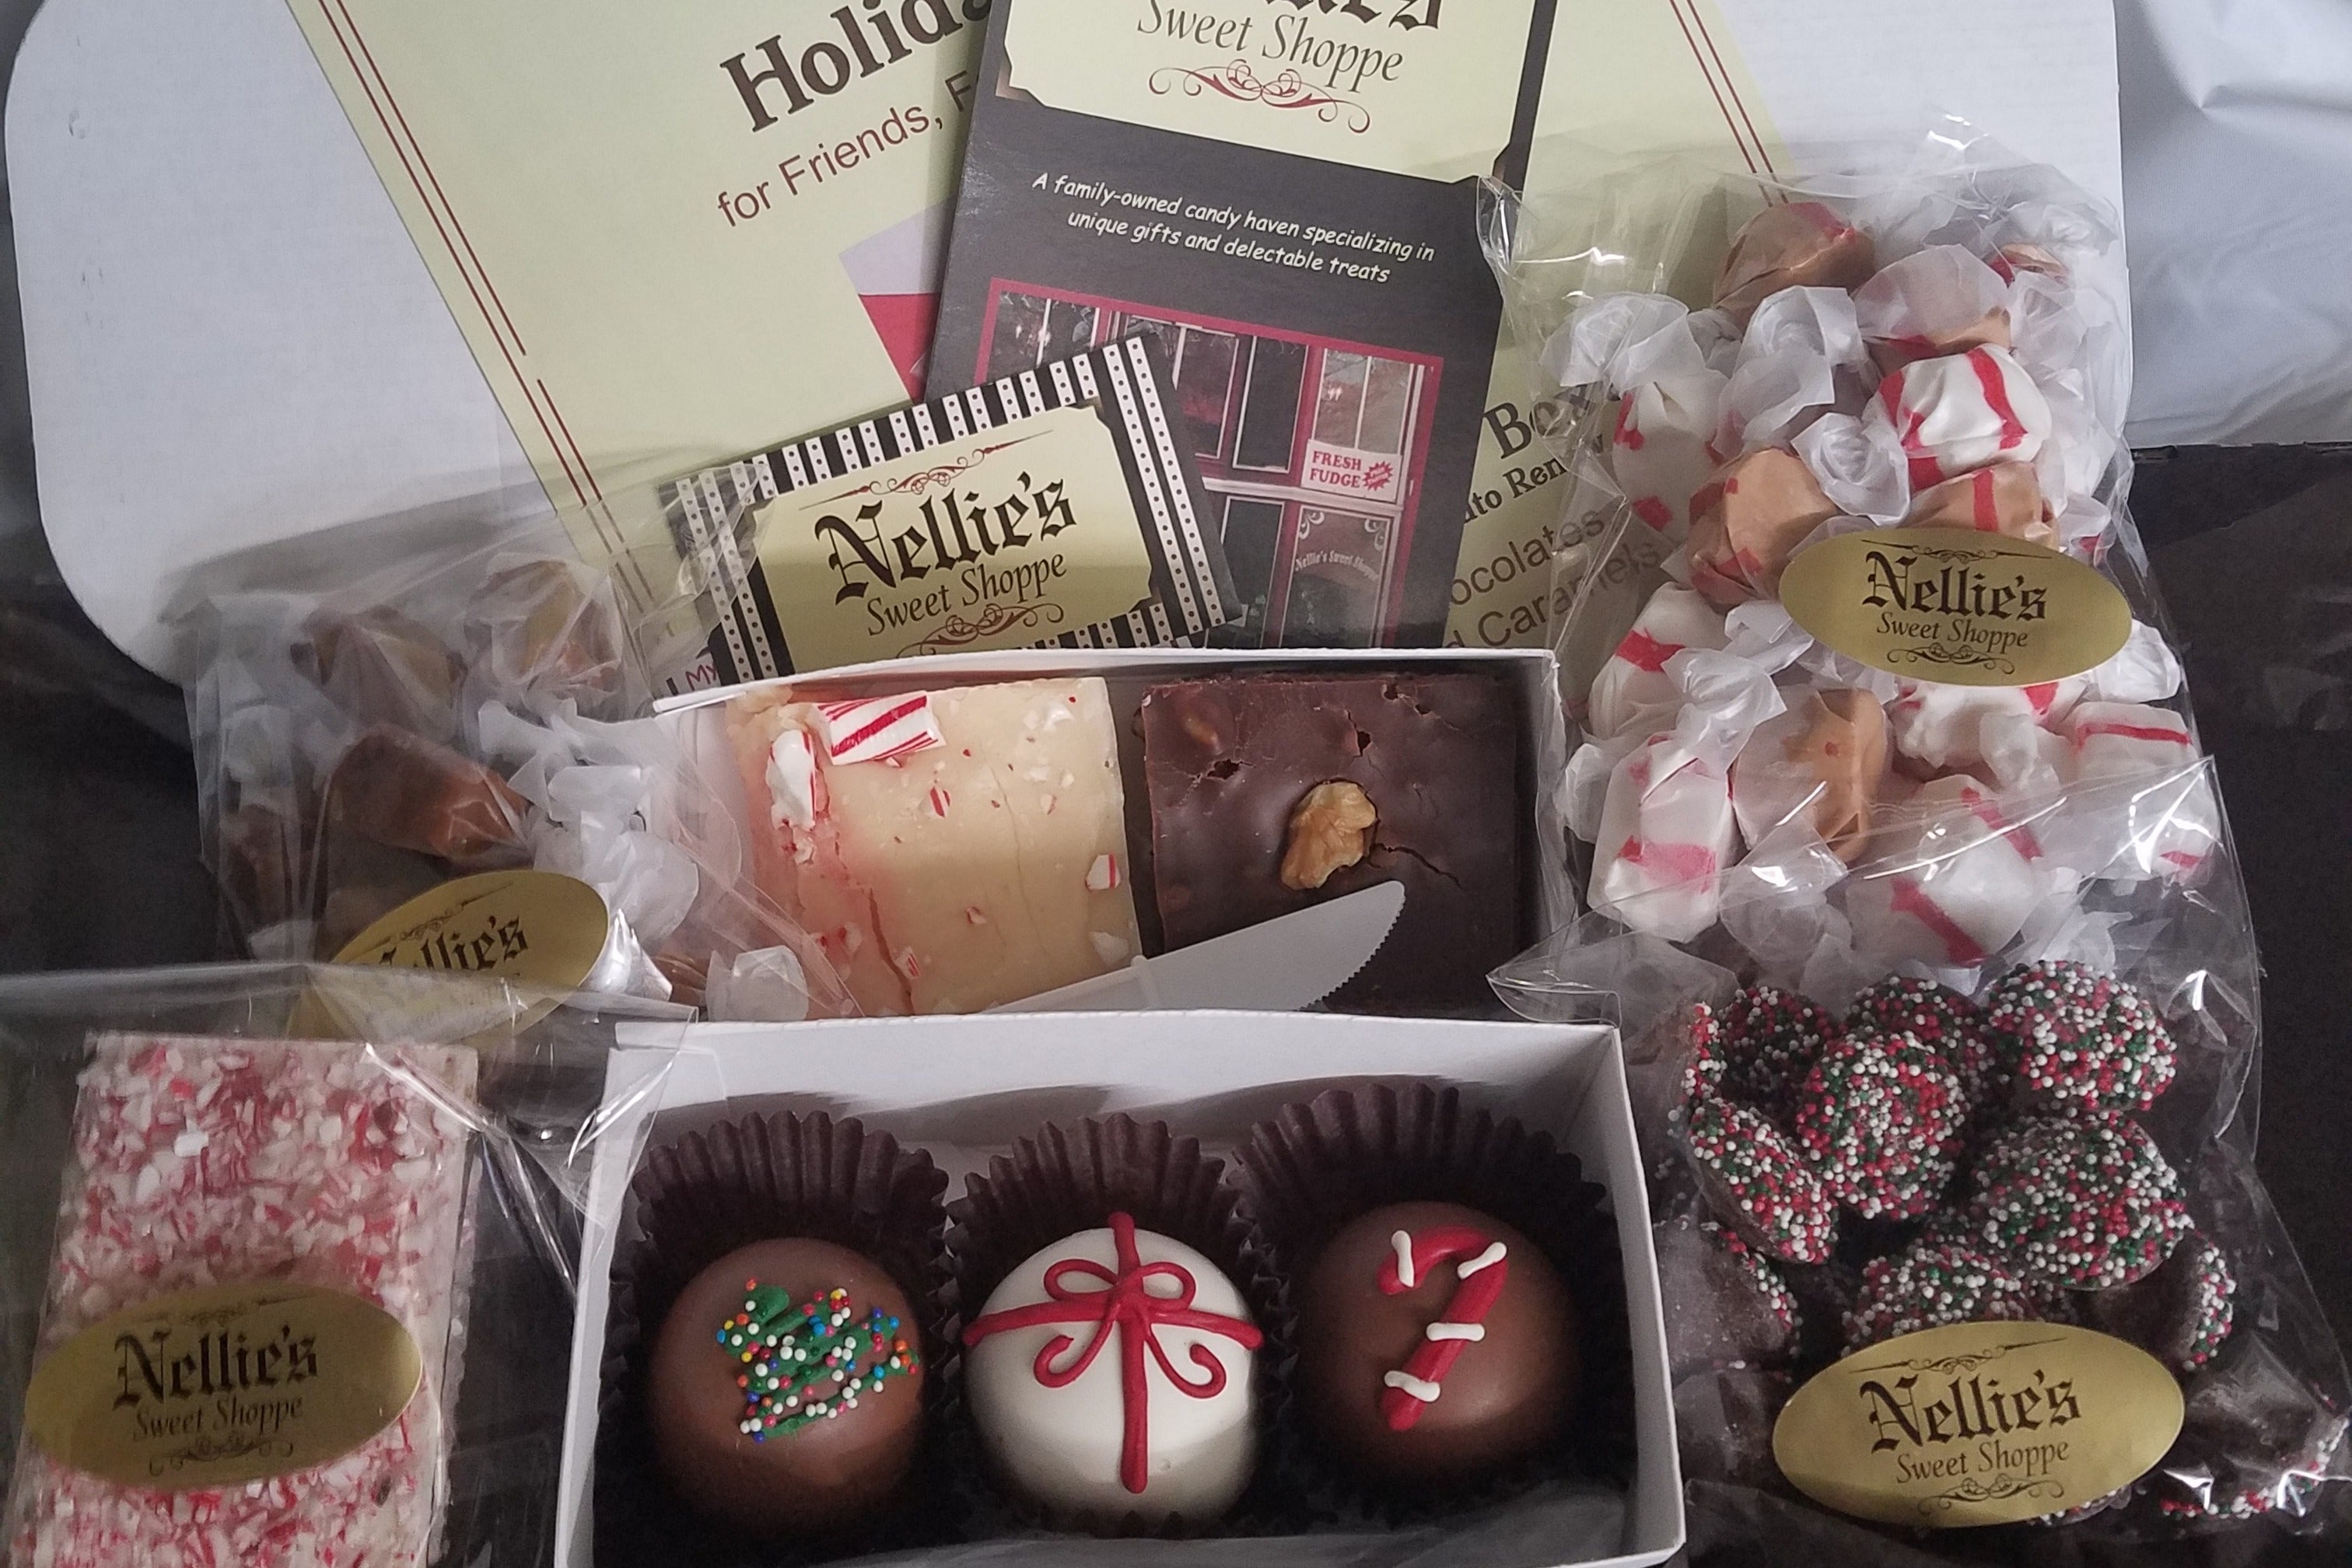 Be Mine Valentine Chocolate Gift Basket - Lake Champlain Chocolates